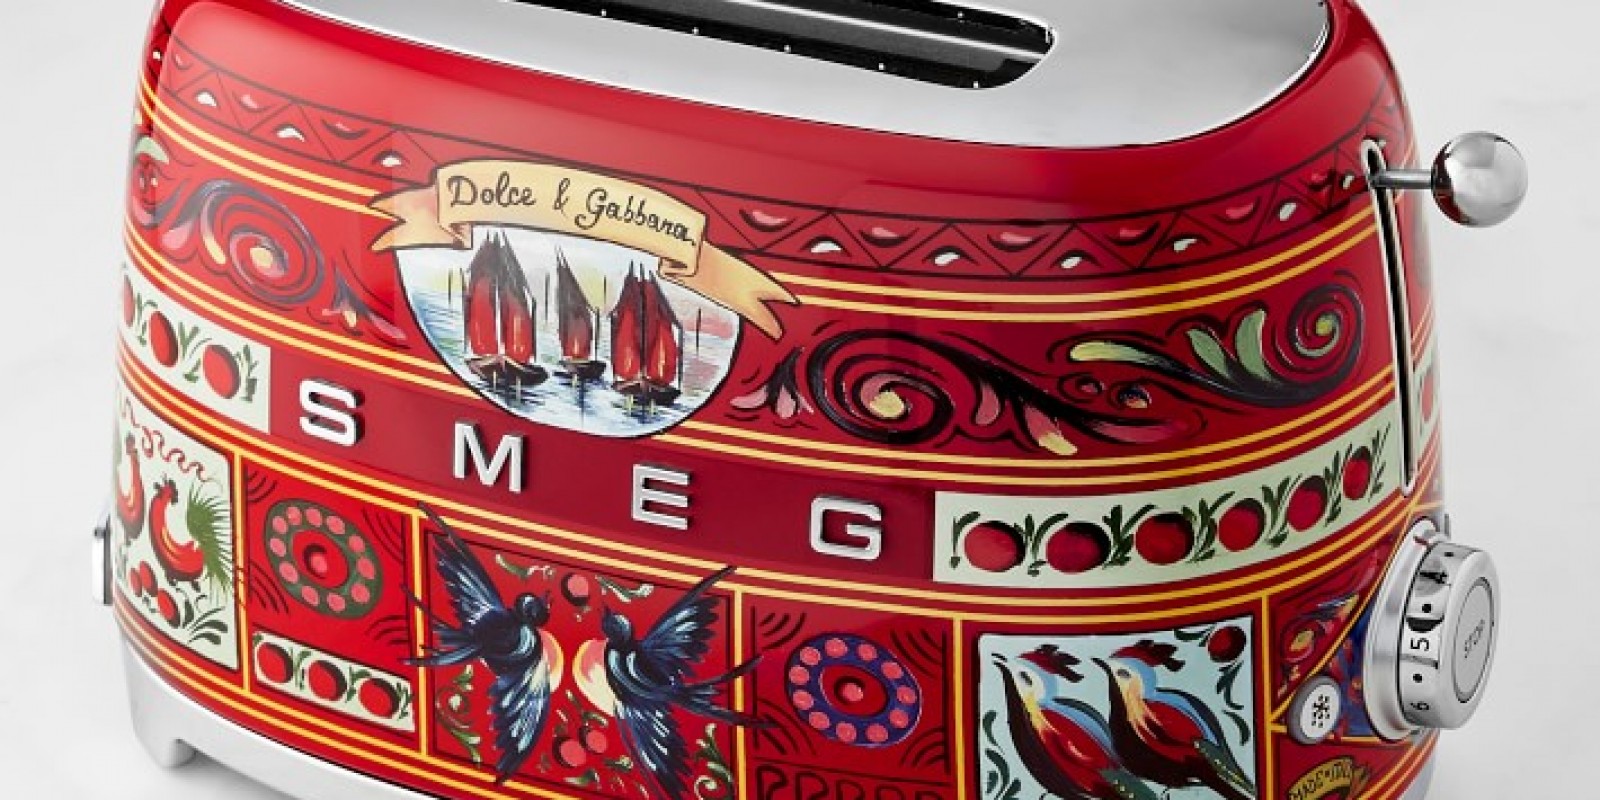 Dolce & Gabbana SMEG Toaster